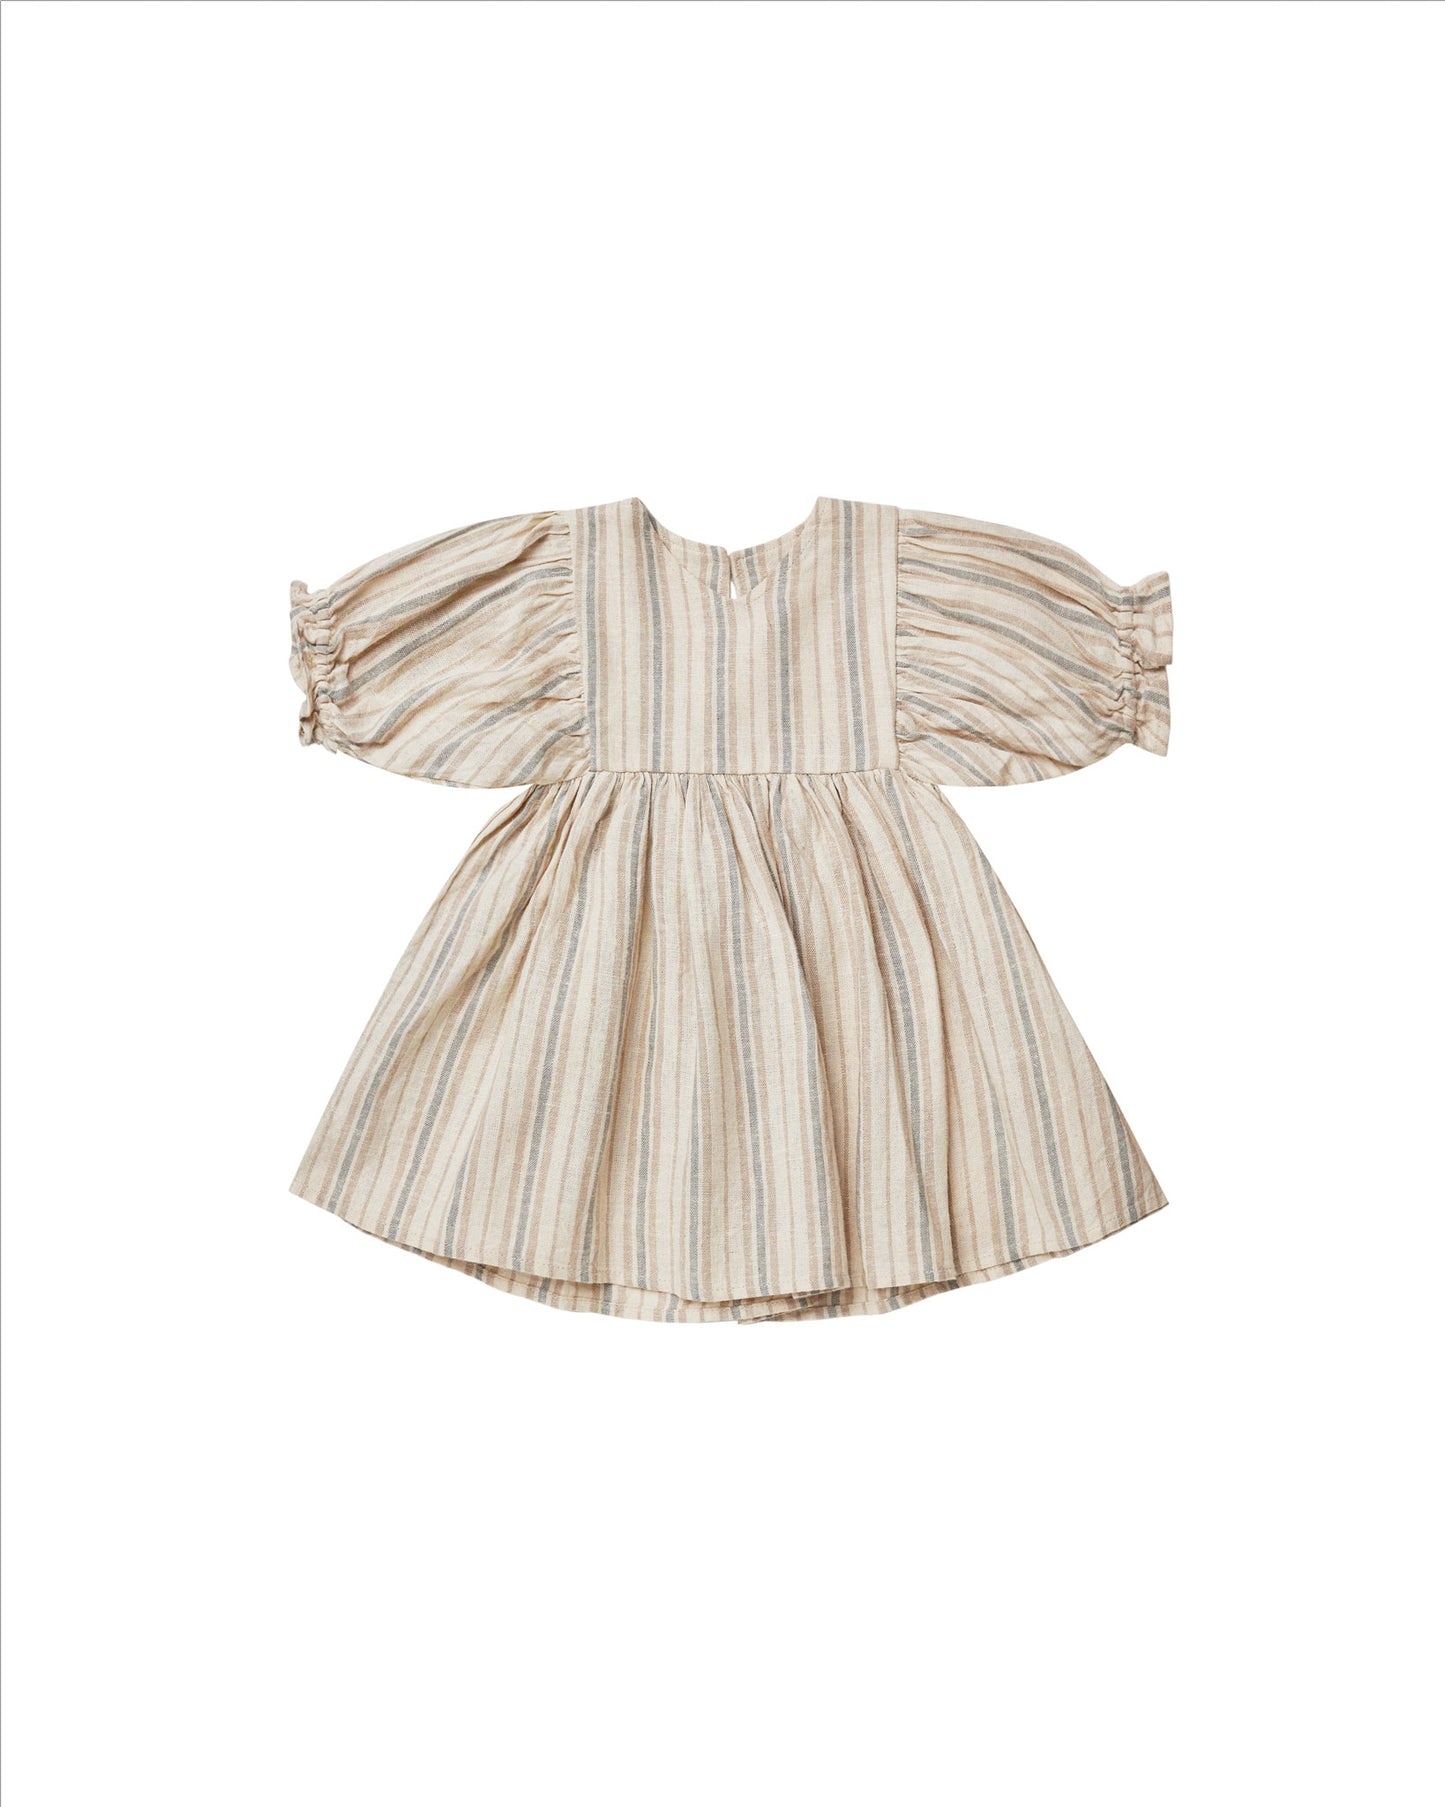 Jolene Short Sleeves Summer Dress Safari Toile Printed Stripe